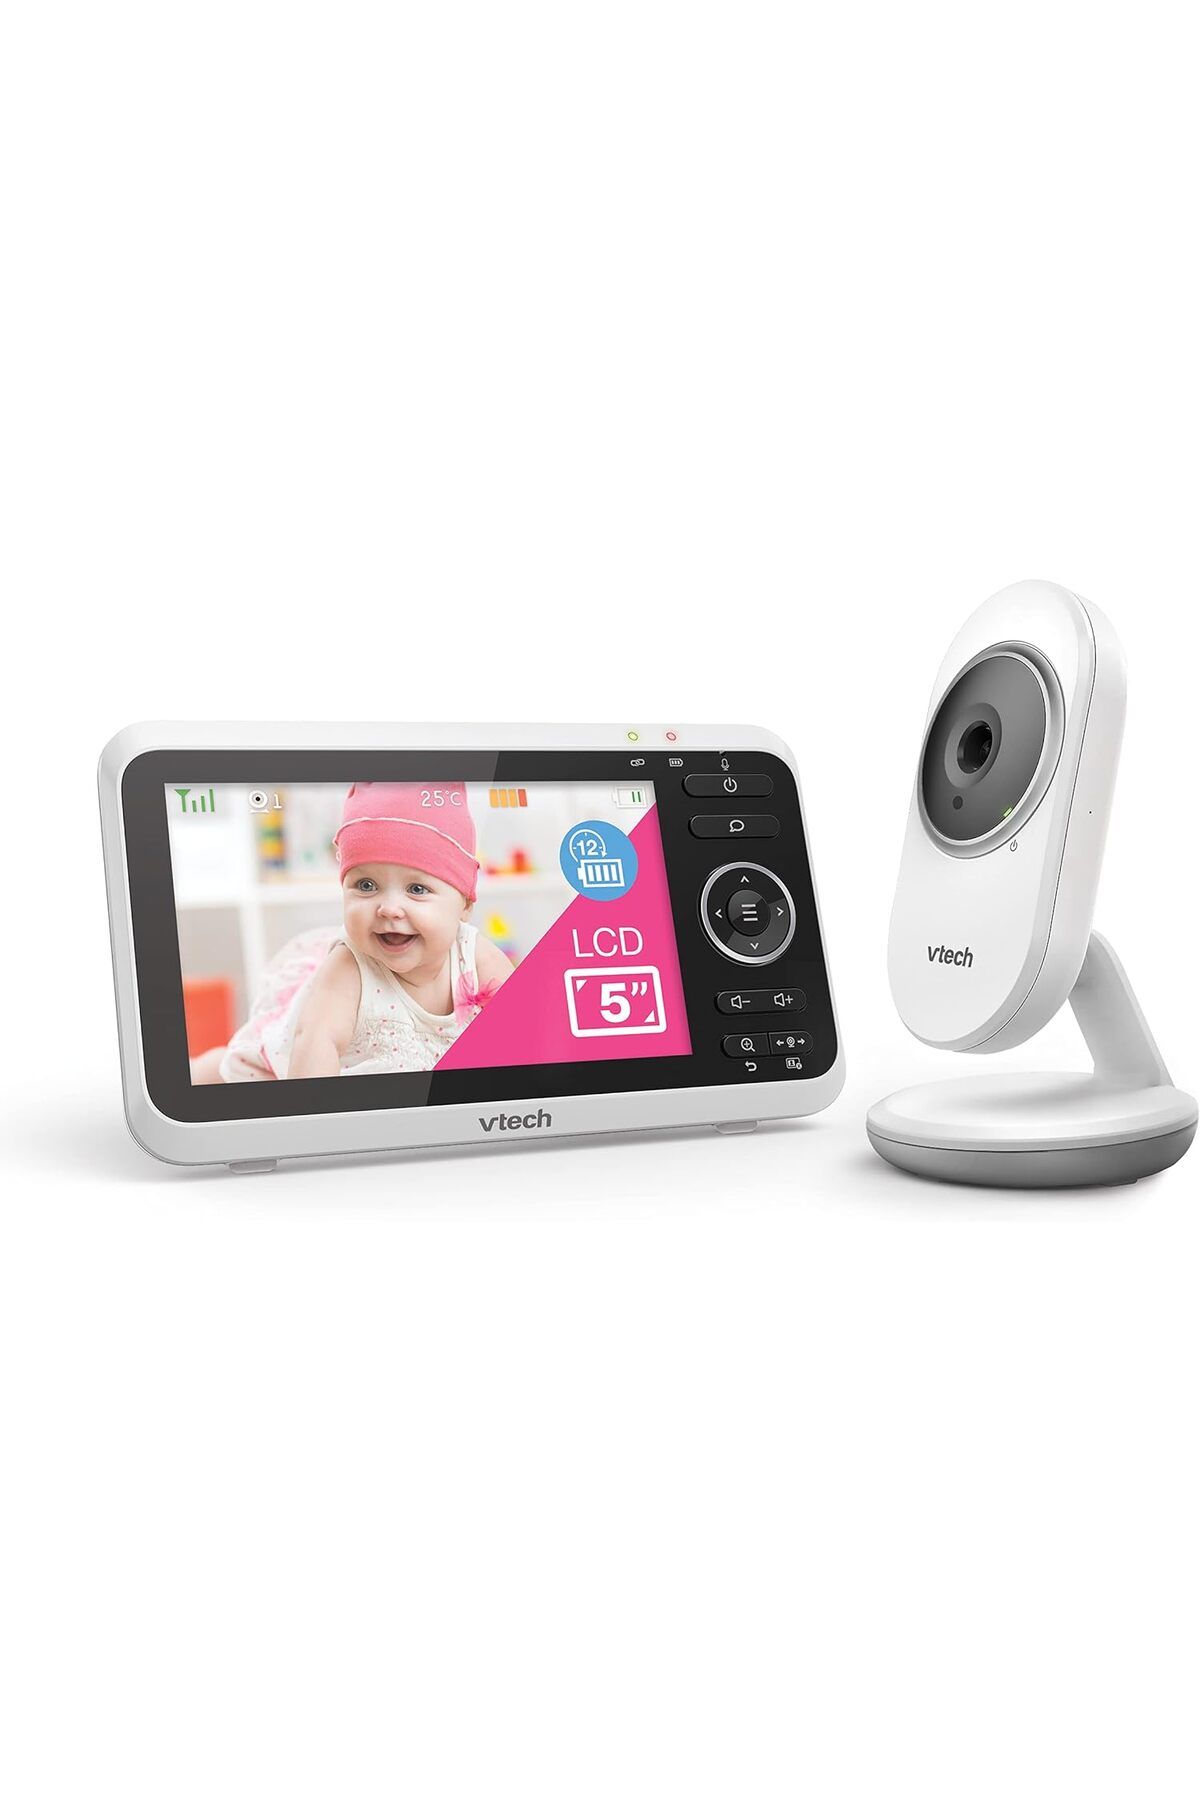 VTech Baby monitör VM350 – hareketli kameralı video bebek telefonu – net ses, LCD renkli ekran